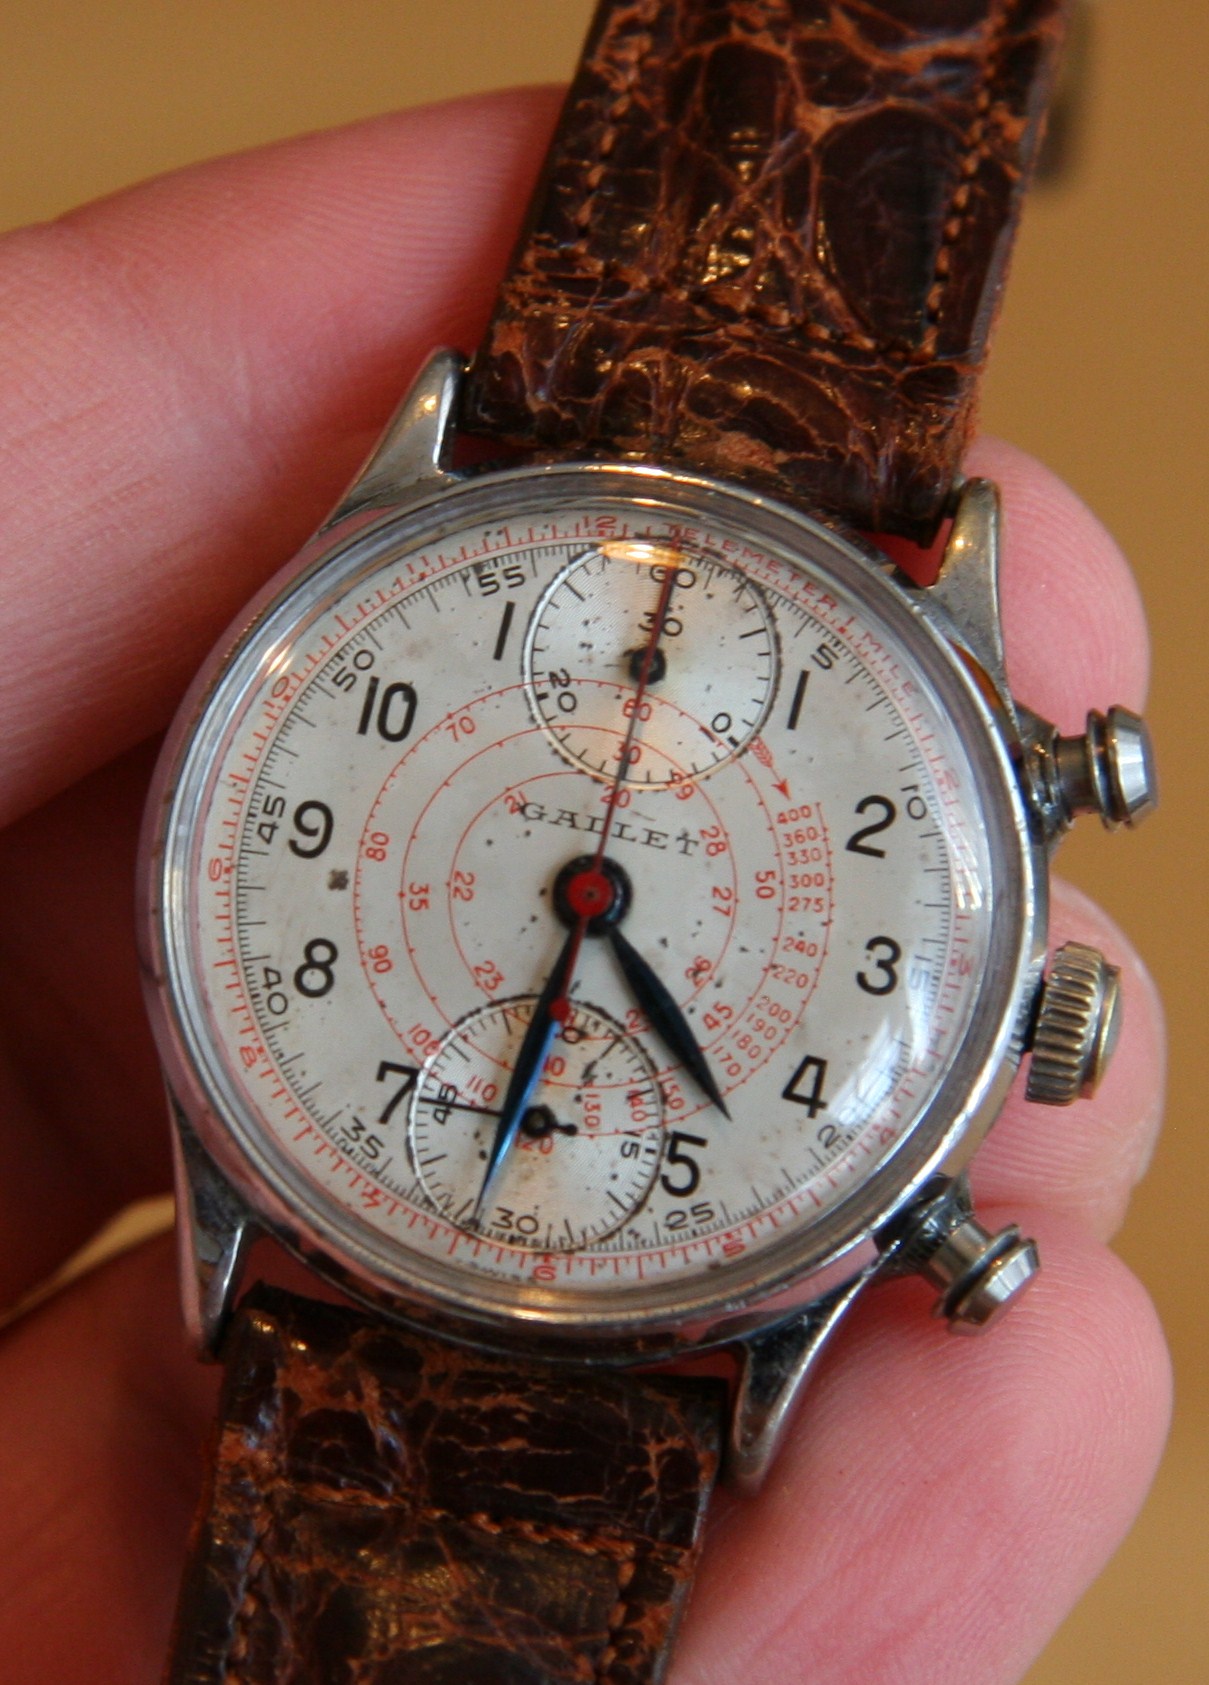 1940s Vintage Gallet Chronograph watch closeup